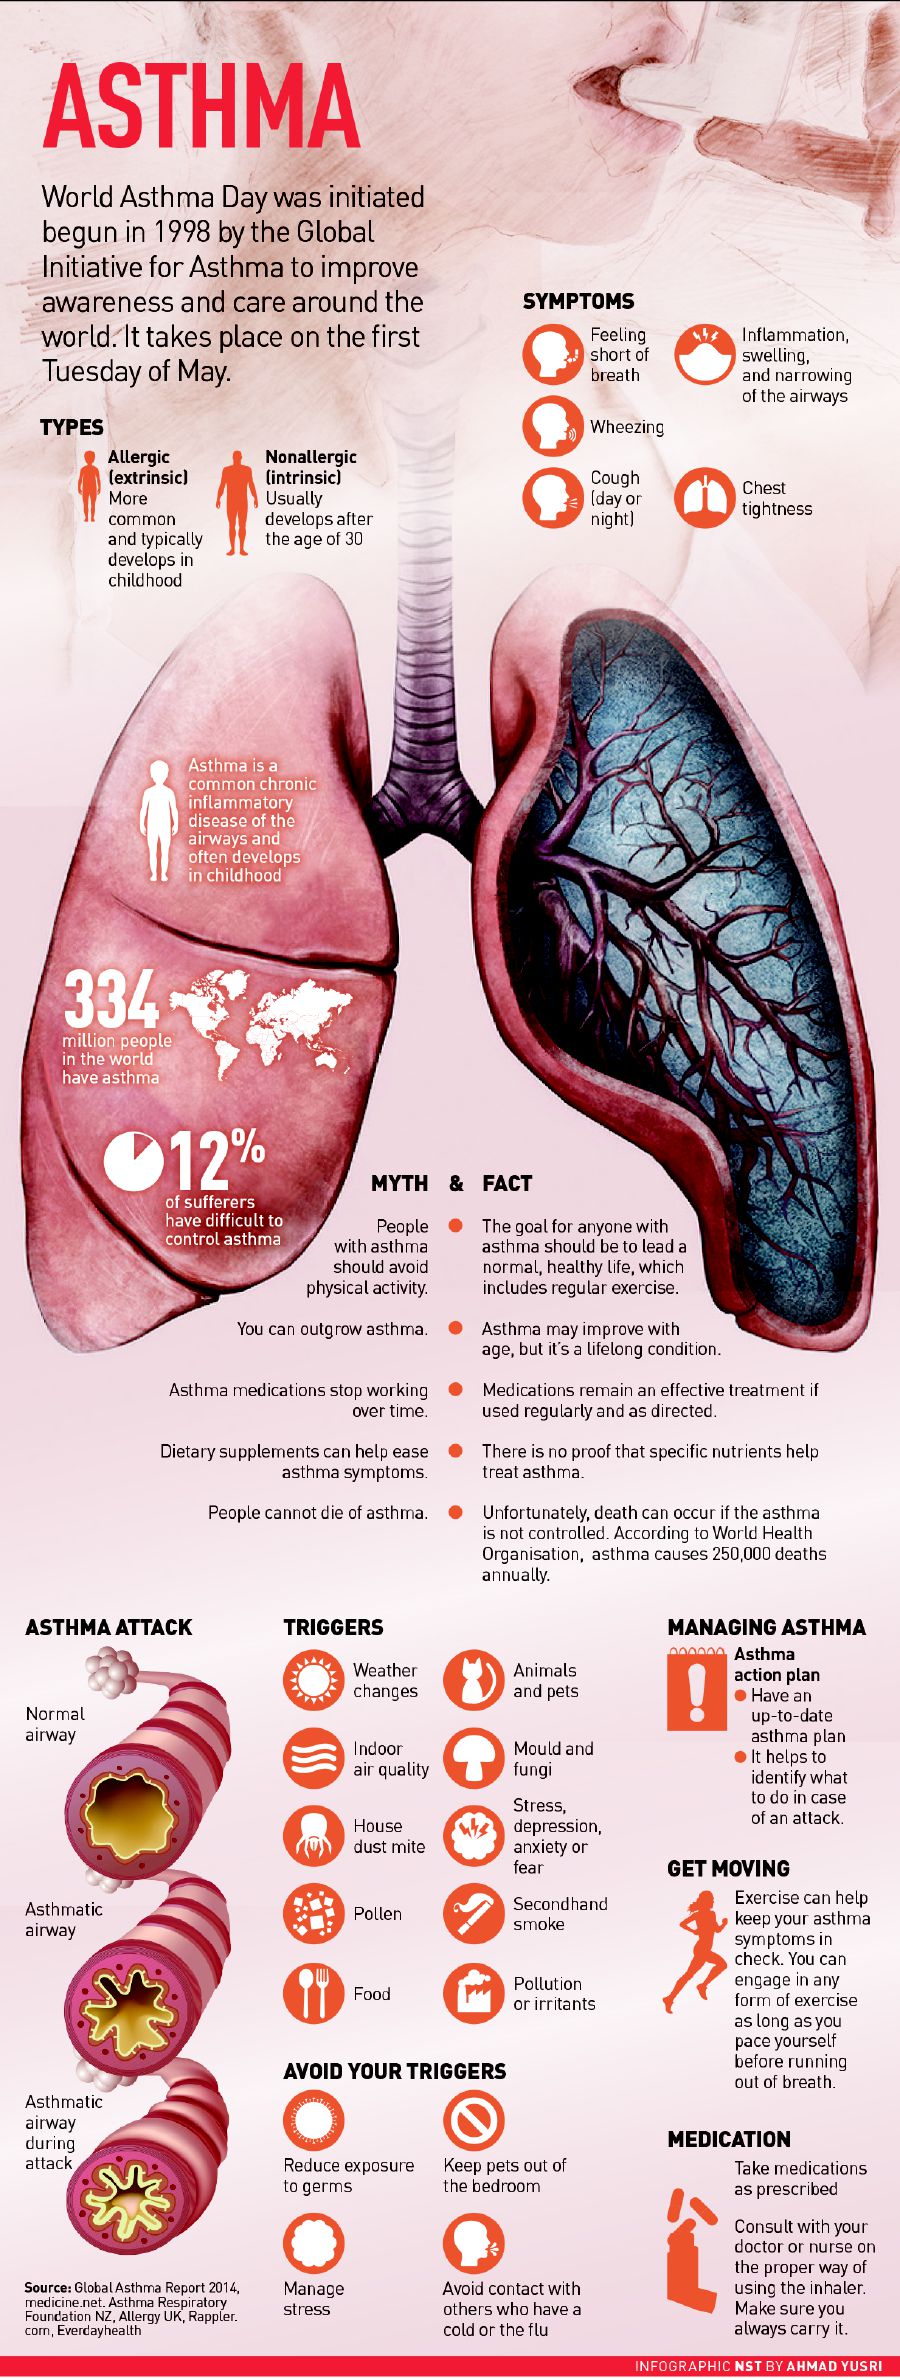 asthma fitness